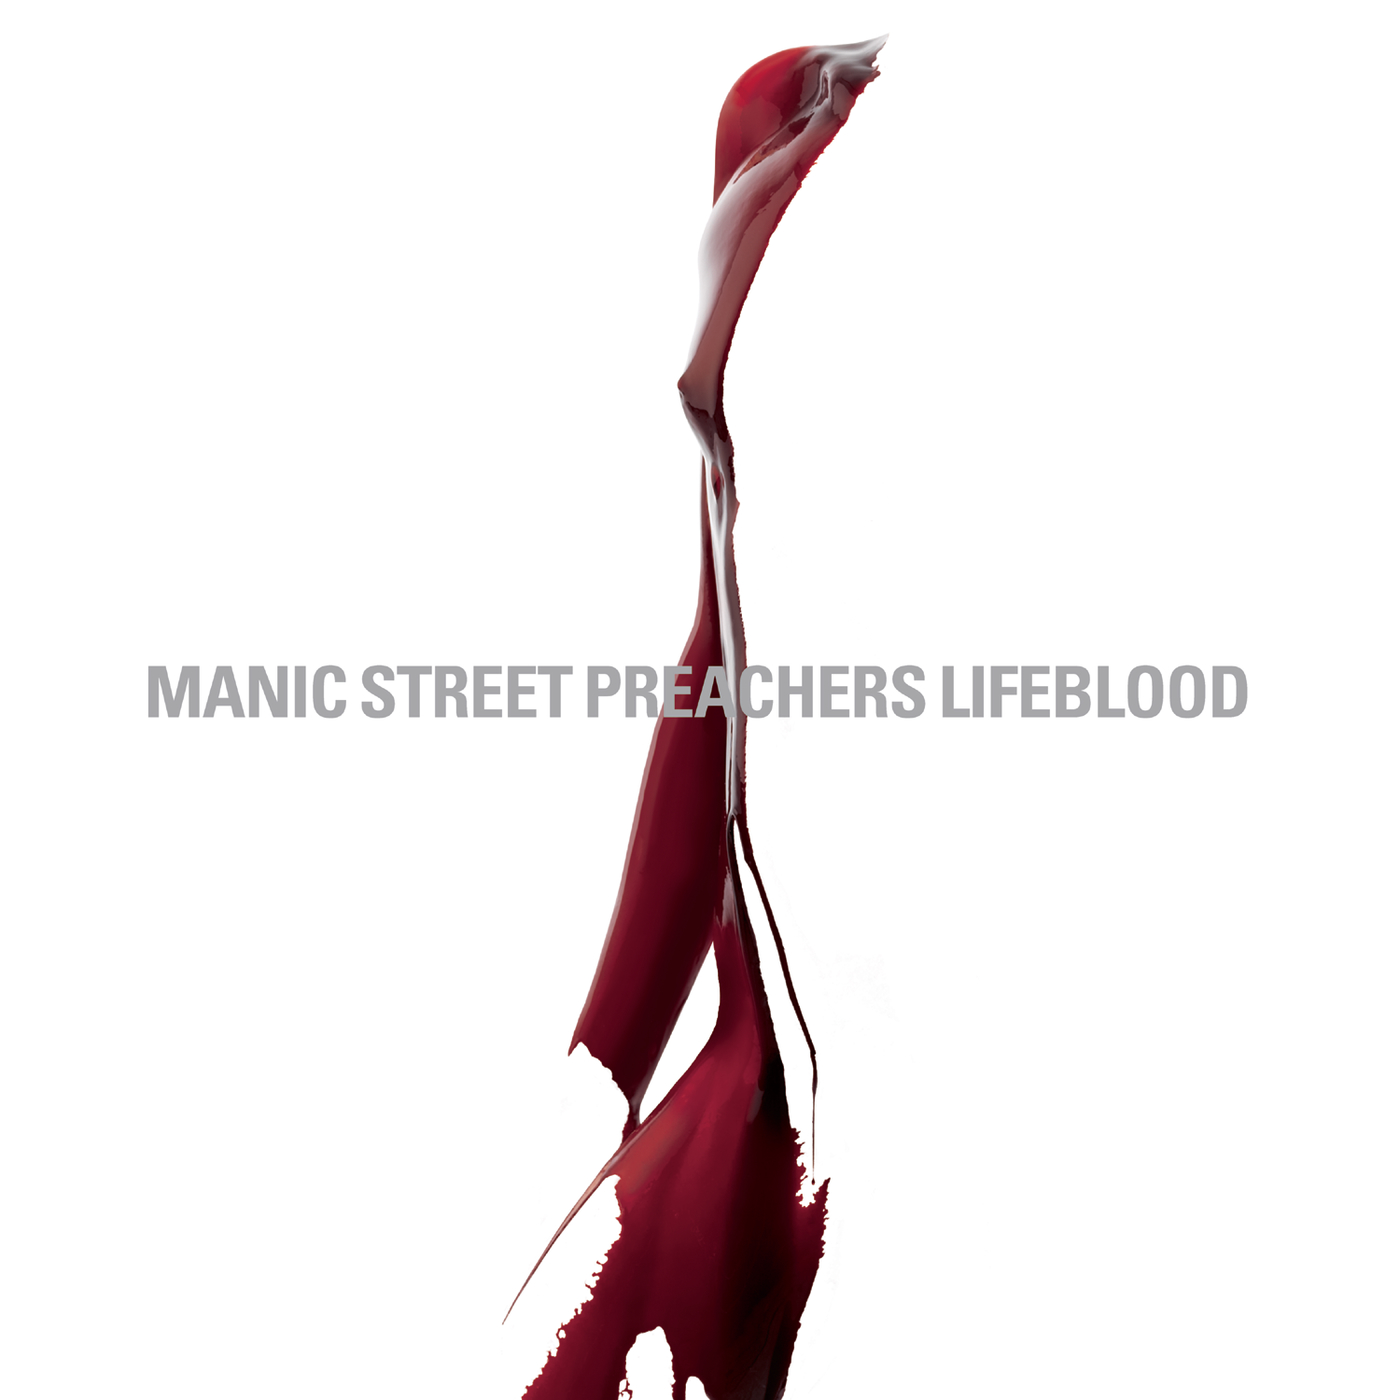 Manic Street Preachers [Lifeblood] (2004)